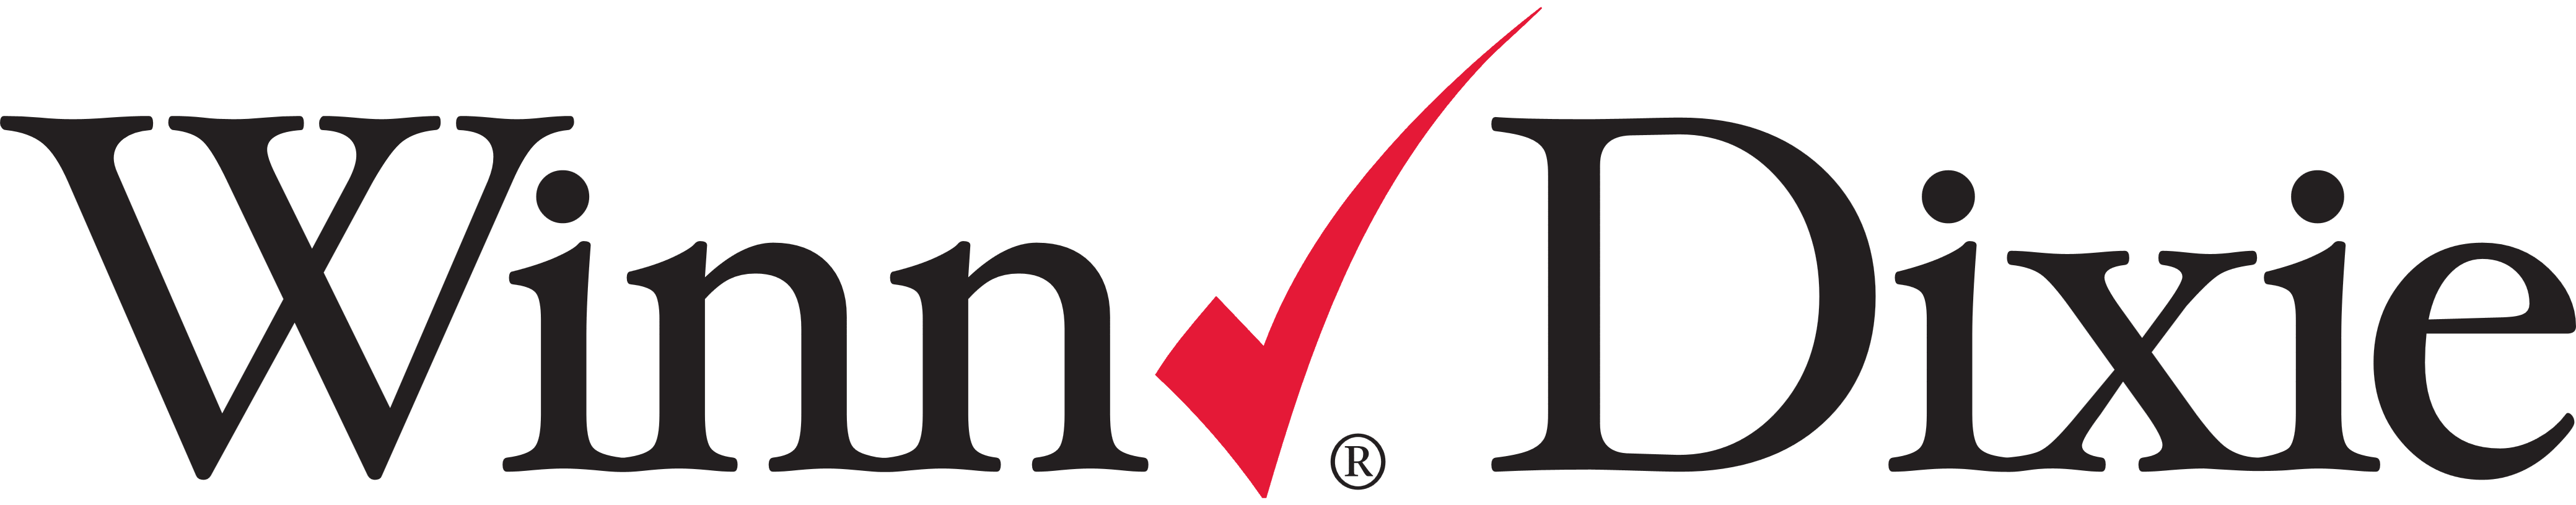 Winn-Dixie logo, logotype